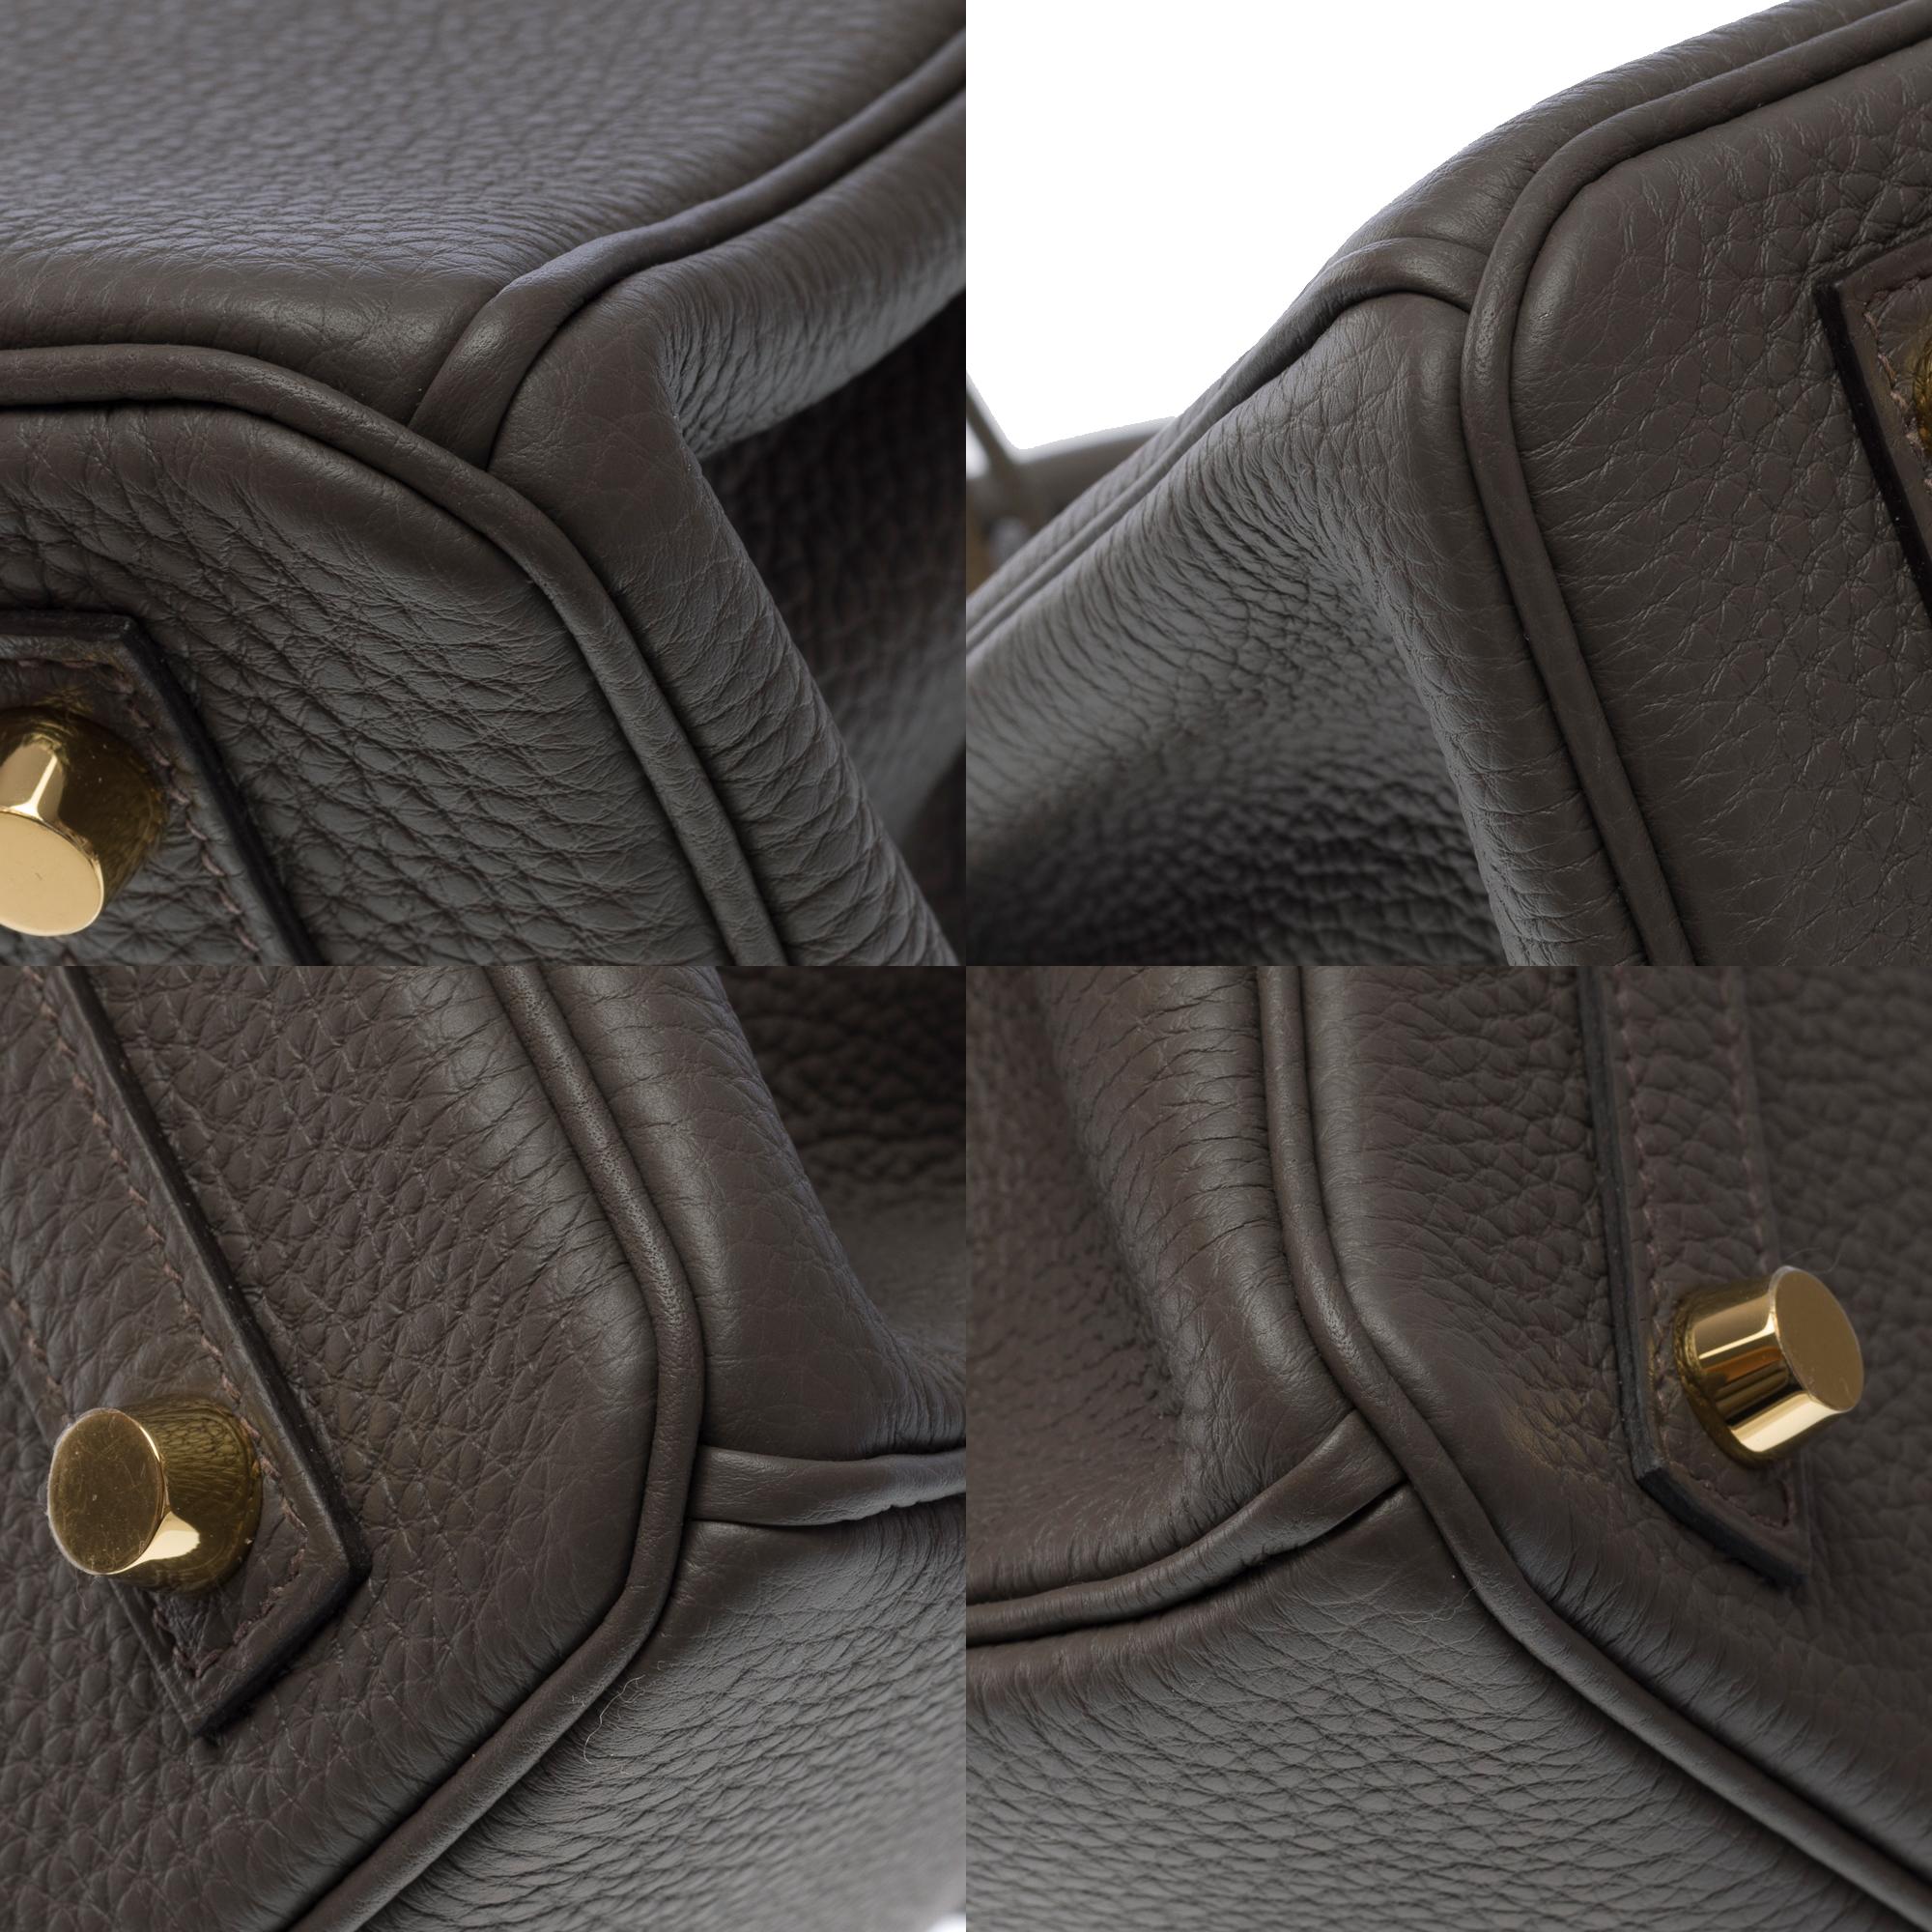 Fantastic New Hermes Birkin 25cm handbag in Etain Togo leather, GHW 7